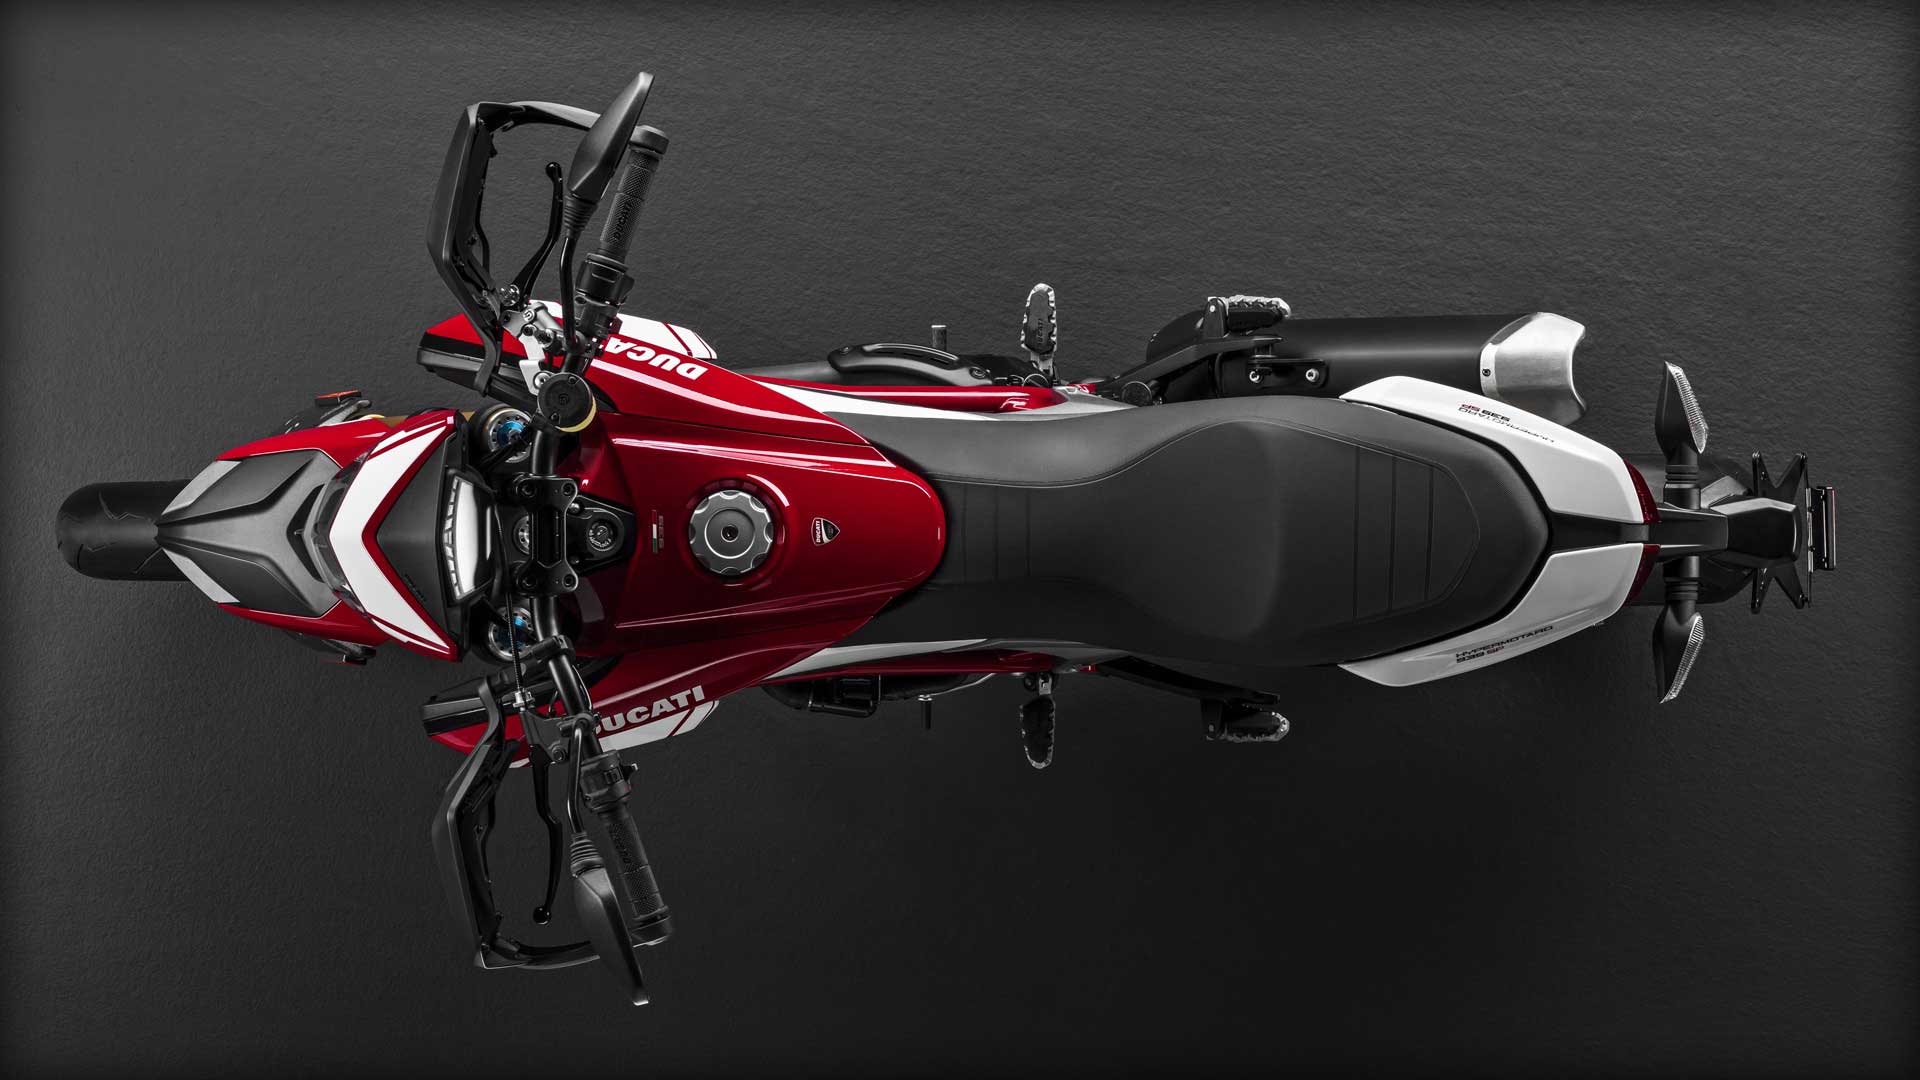 Ducati Hypermotard 939 top view